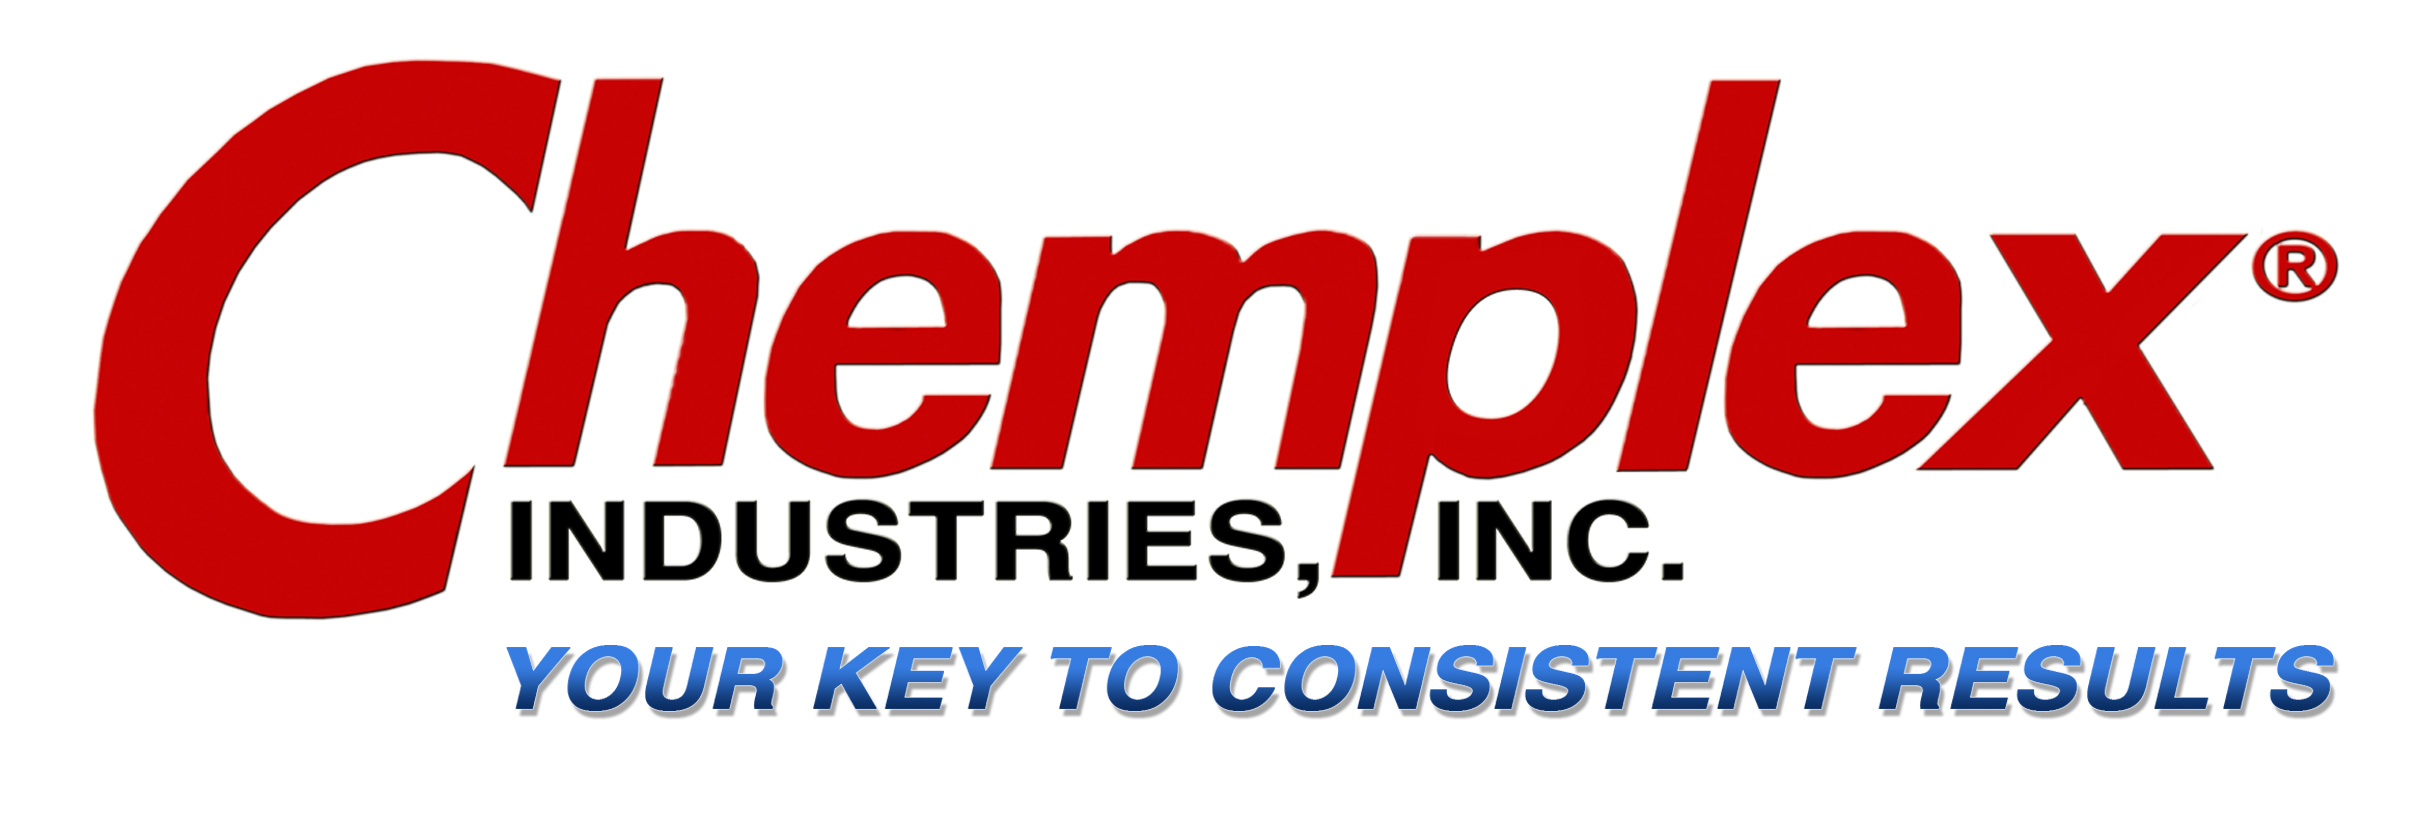 Chemplex Industries, Inc.